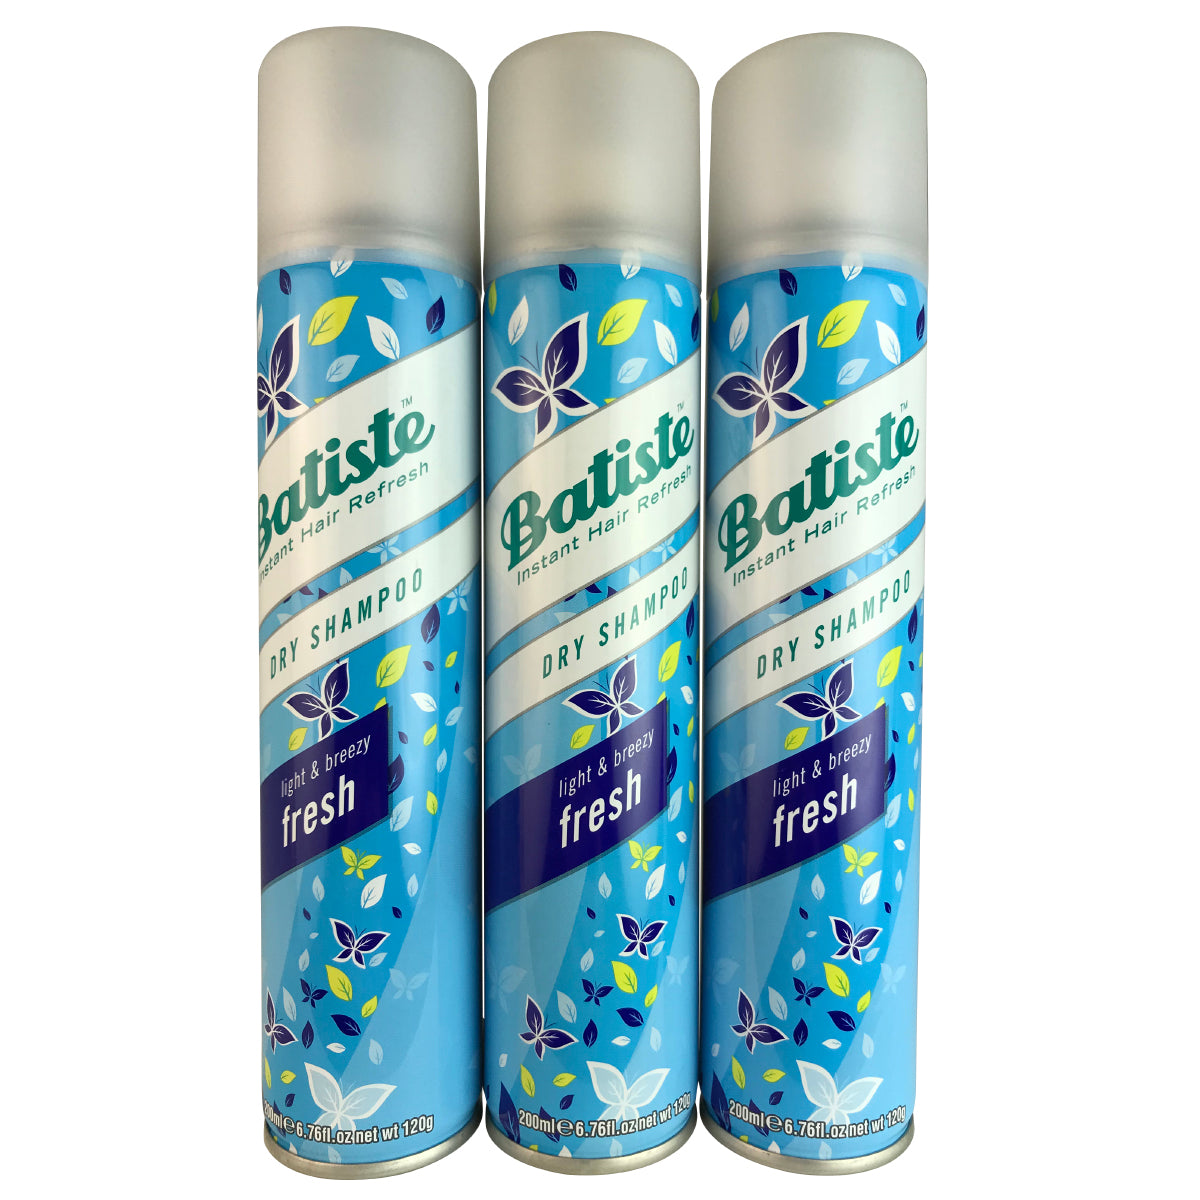 Batiste Dry Hair Shampoo Fresh Trio 6.73 oz Each